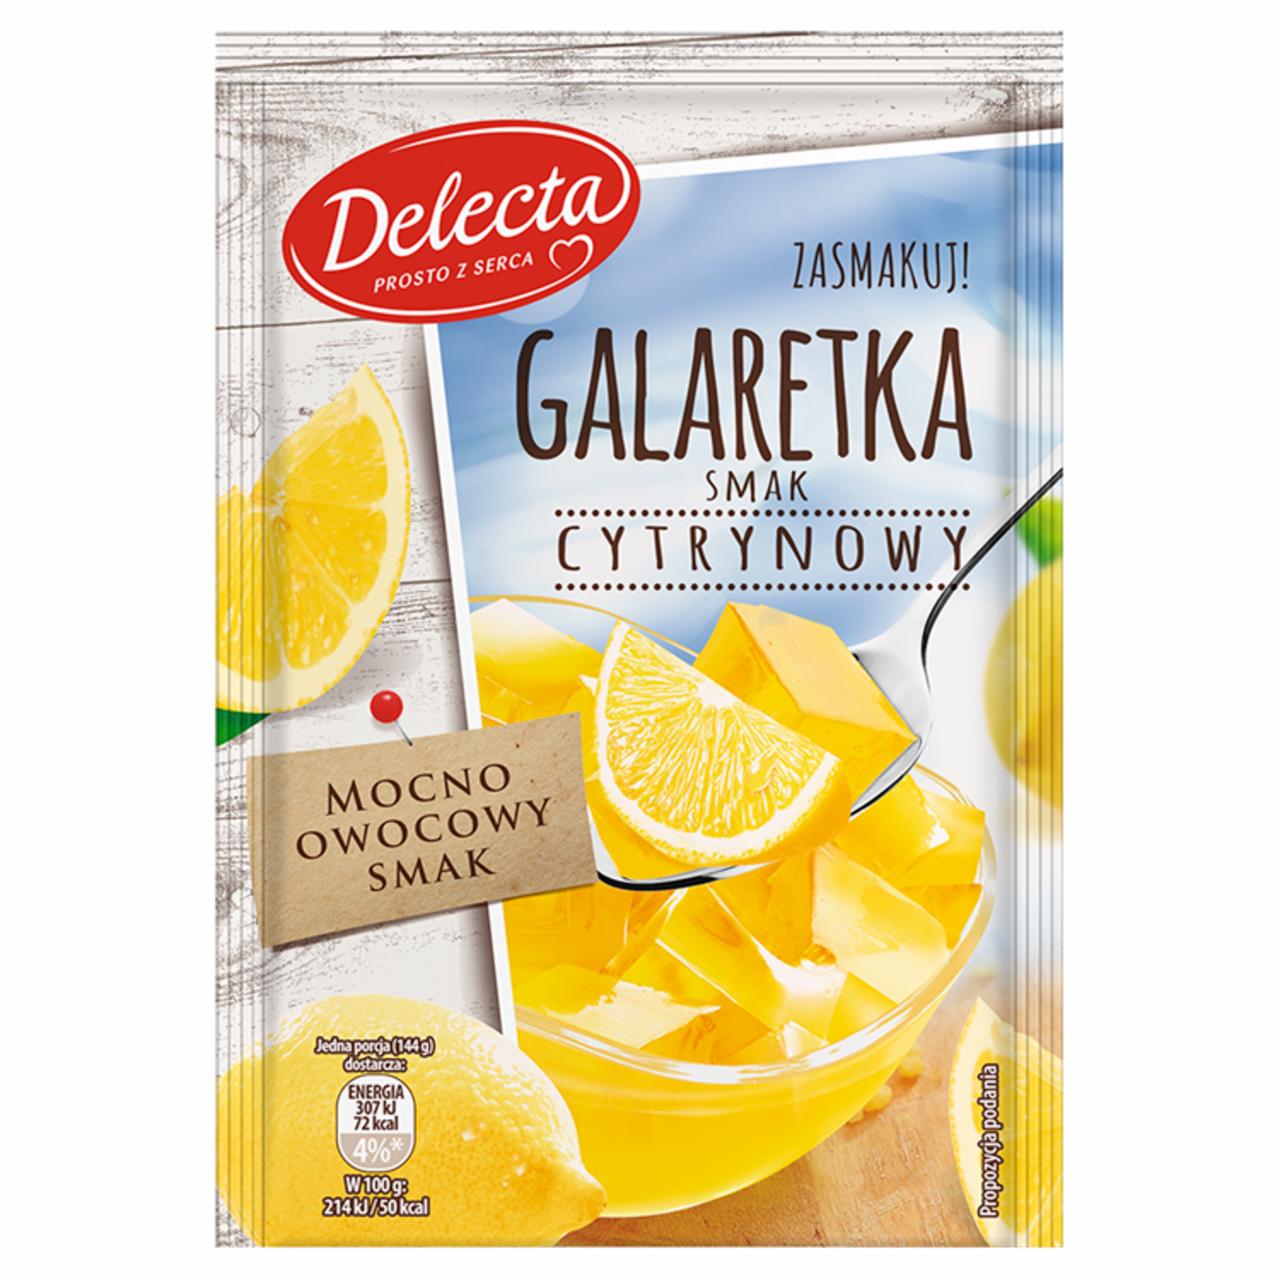 Zdjęcia - Delecta Galaretka smak cytrynowy 75 g